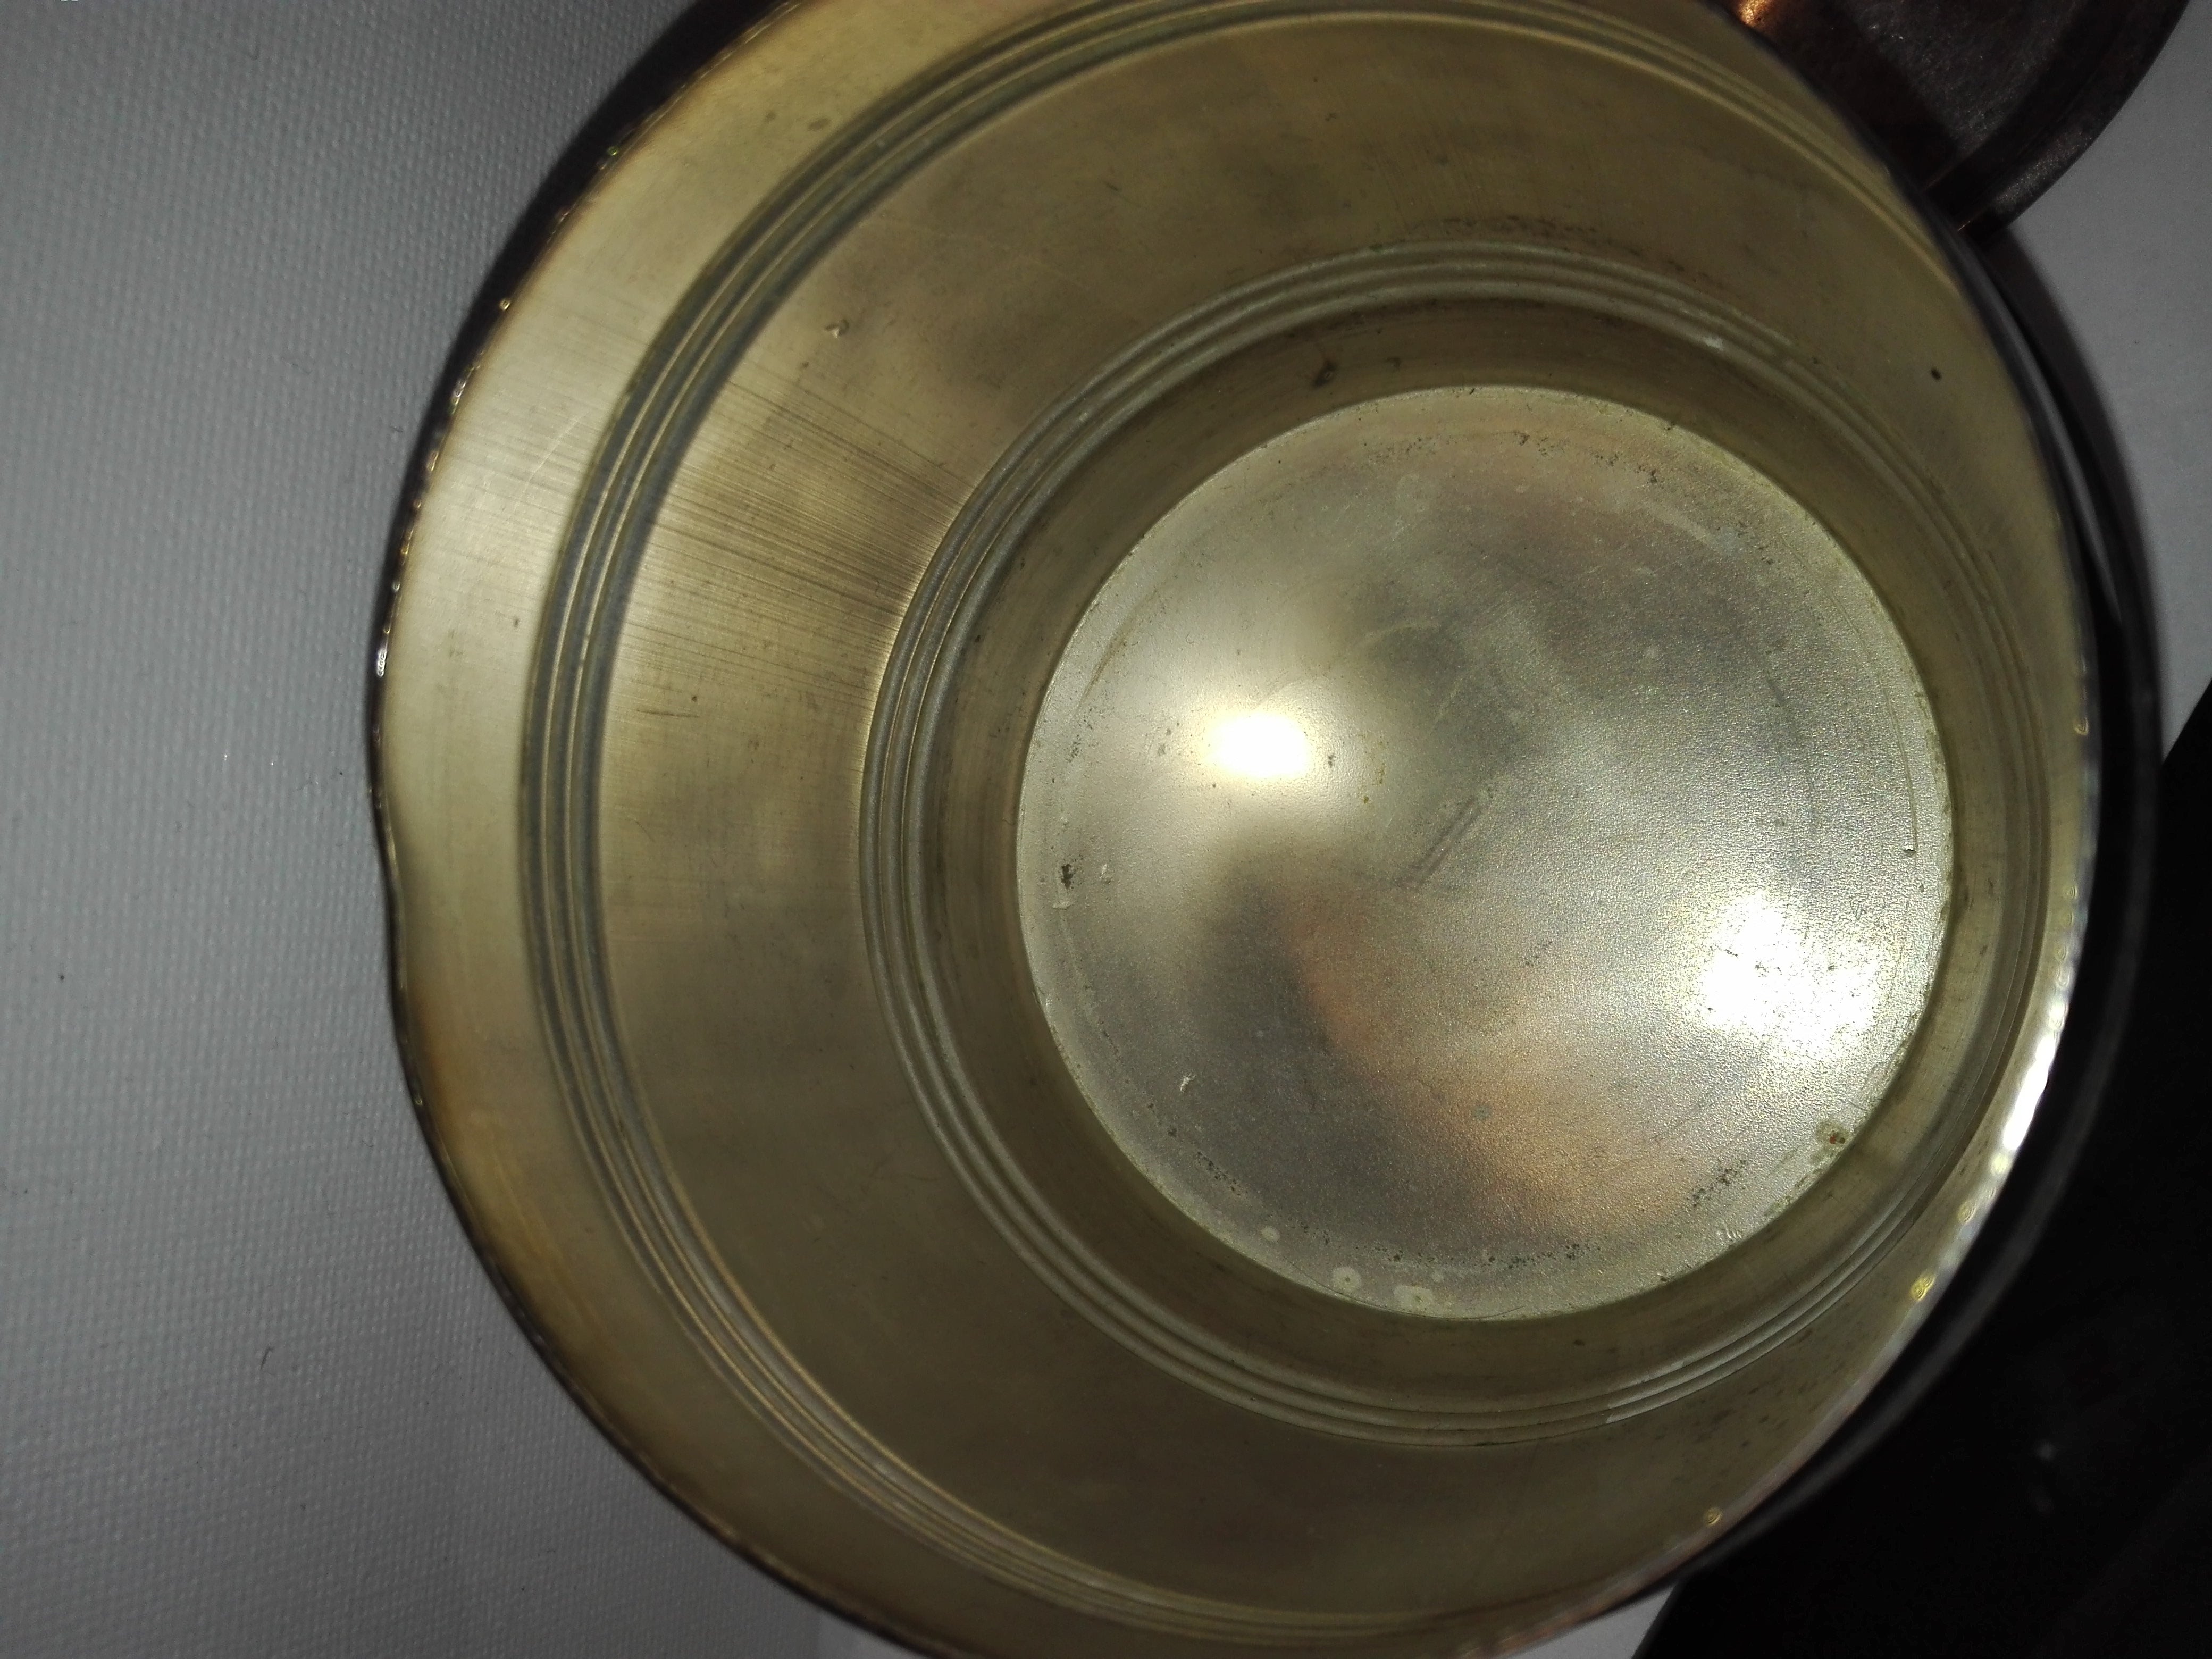 Old-fashioned new silver (PRIMA P. NYSILVER) SMALL Biscuit Barrel